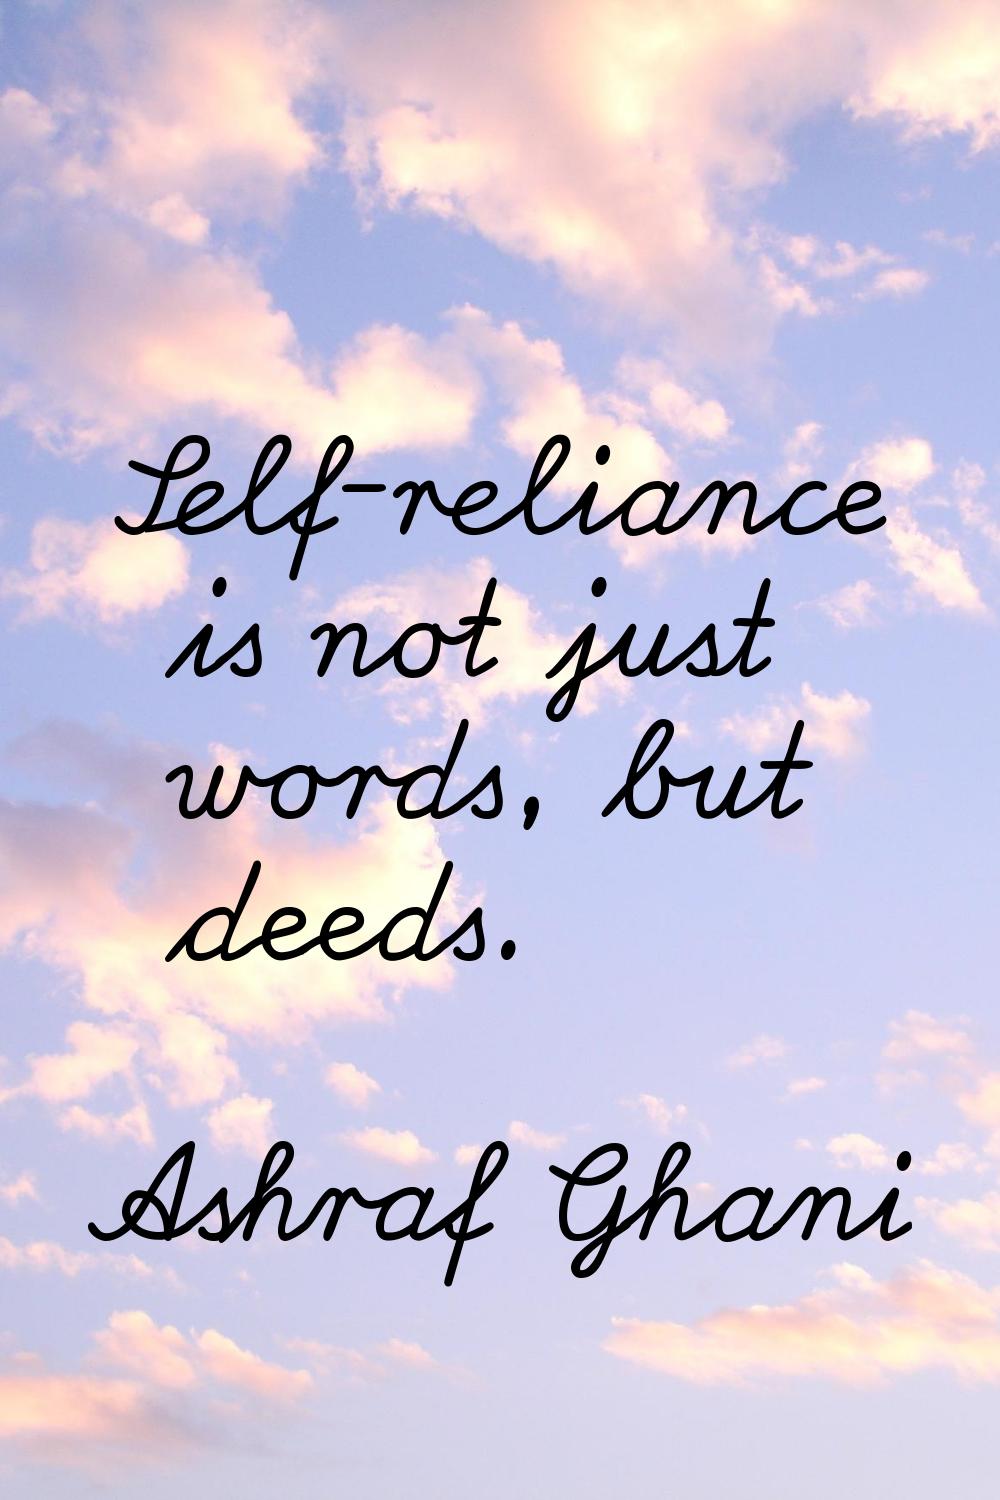 Self-reliance is not just words, but deeds.